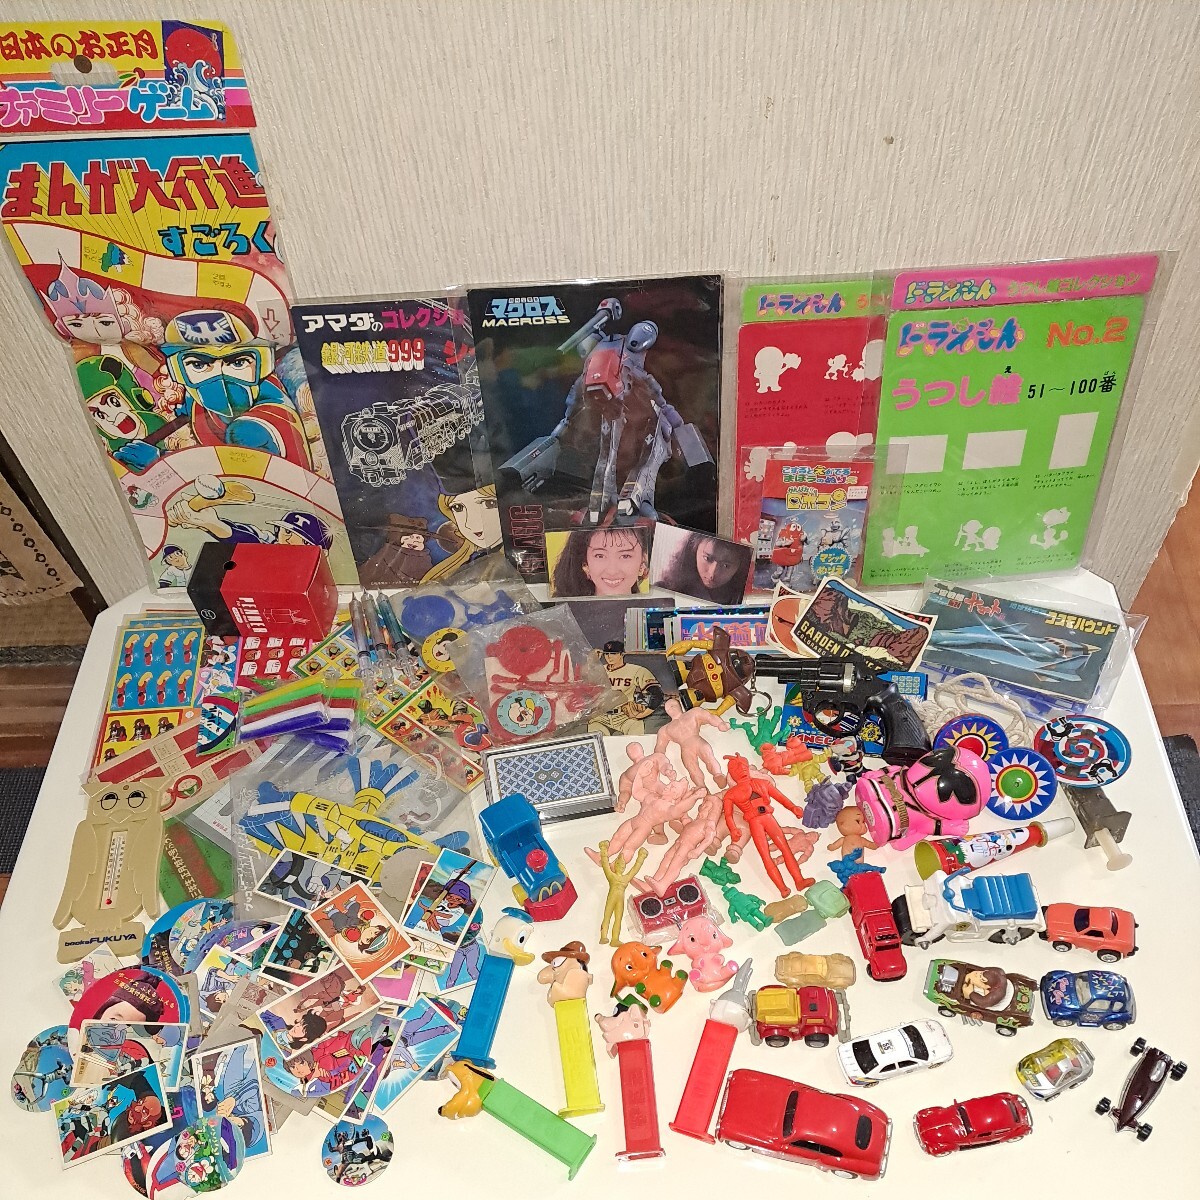  Showa Retro cheap sweets dagashi shop toy various large amount set secondhand goods 